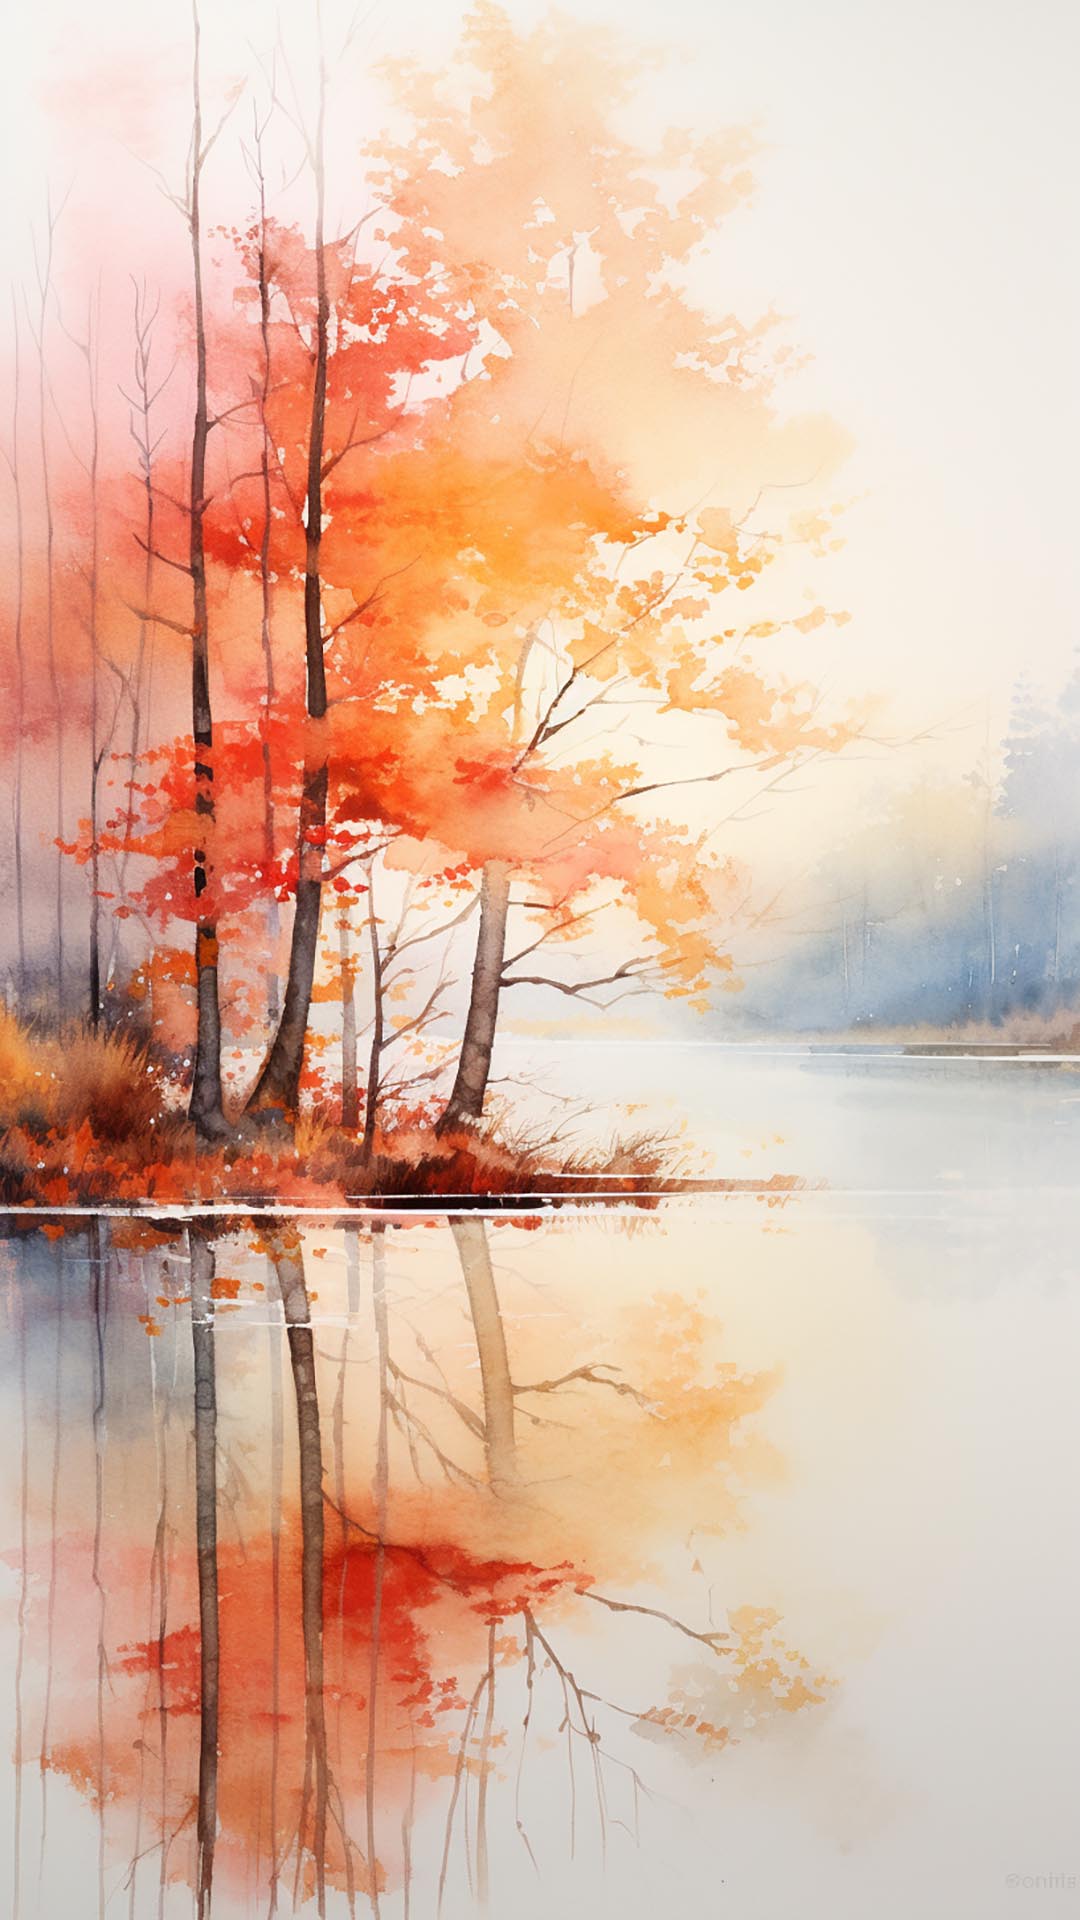 Watercolor November trees and water wallpaper